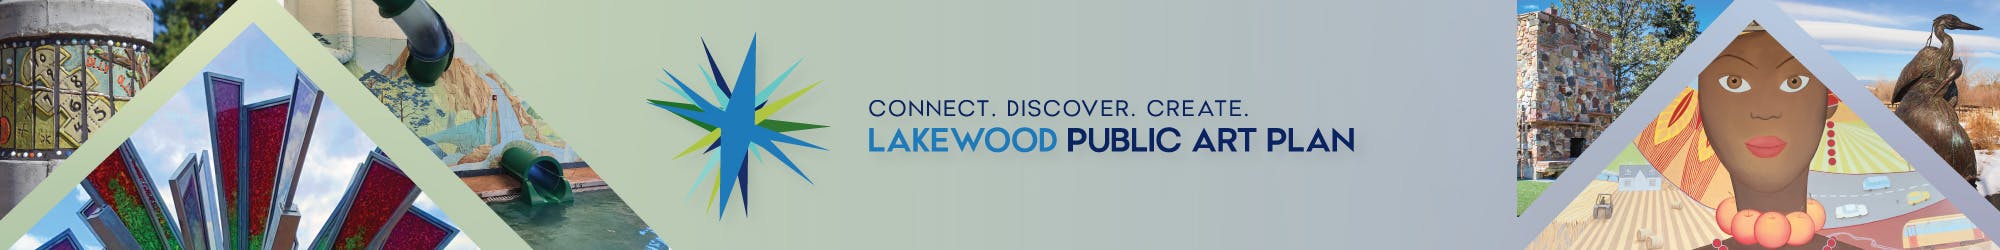 Connect. Discover. Create: Lakewood Public Art Plan